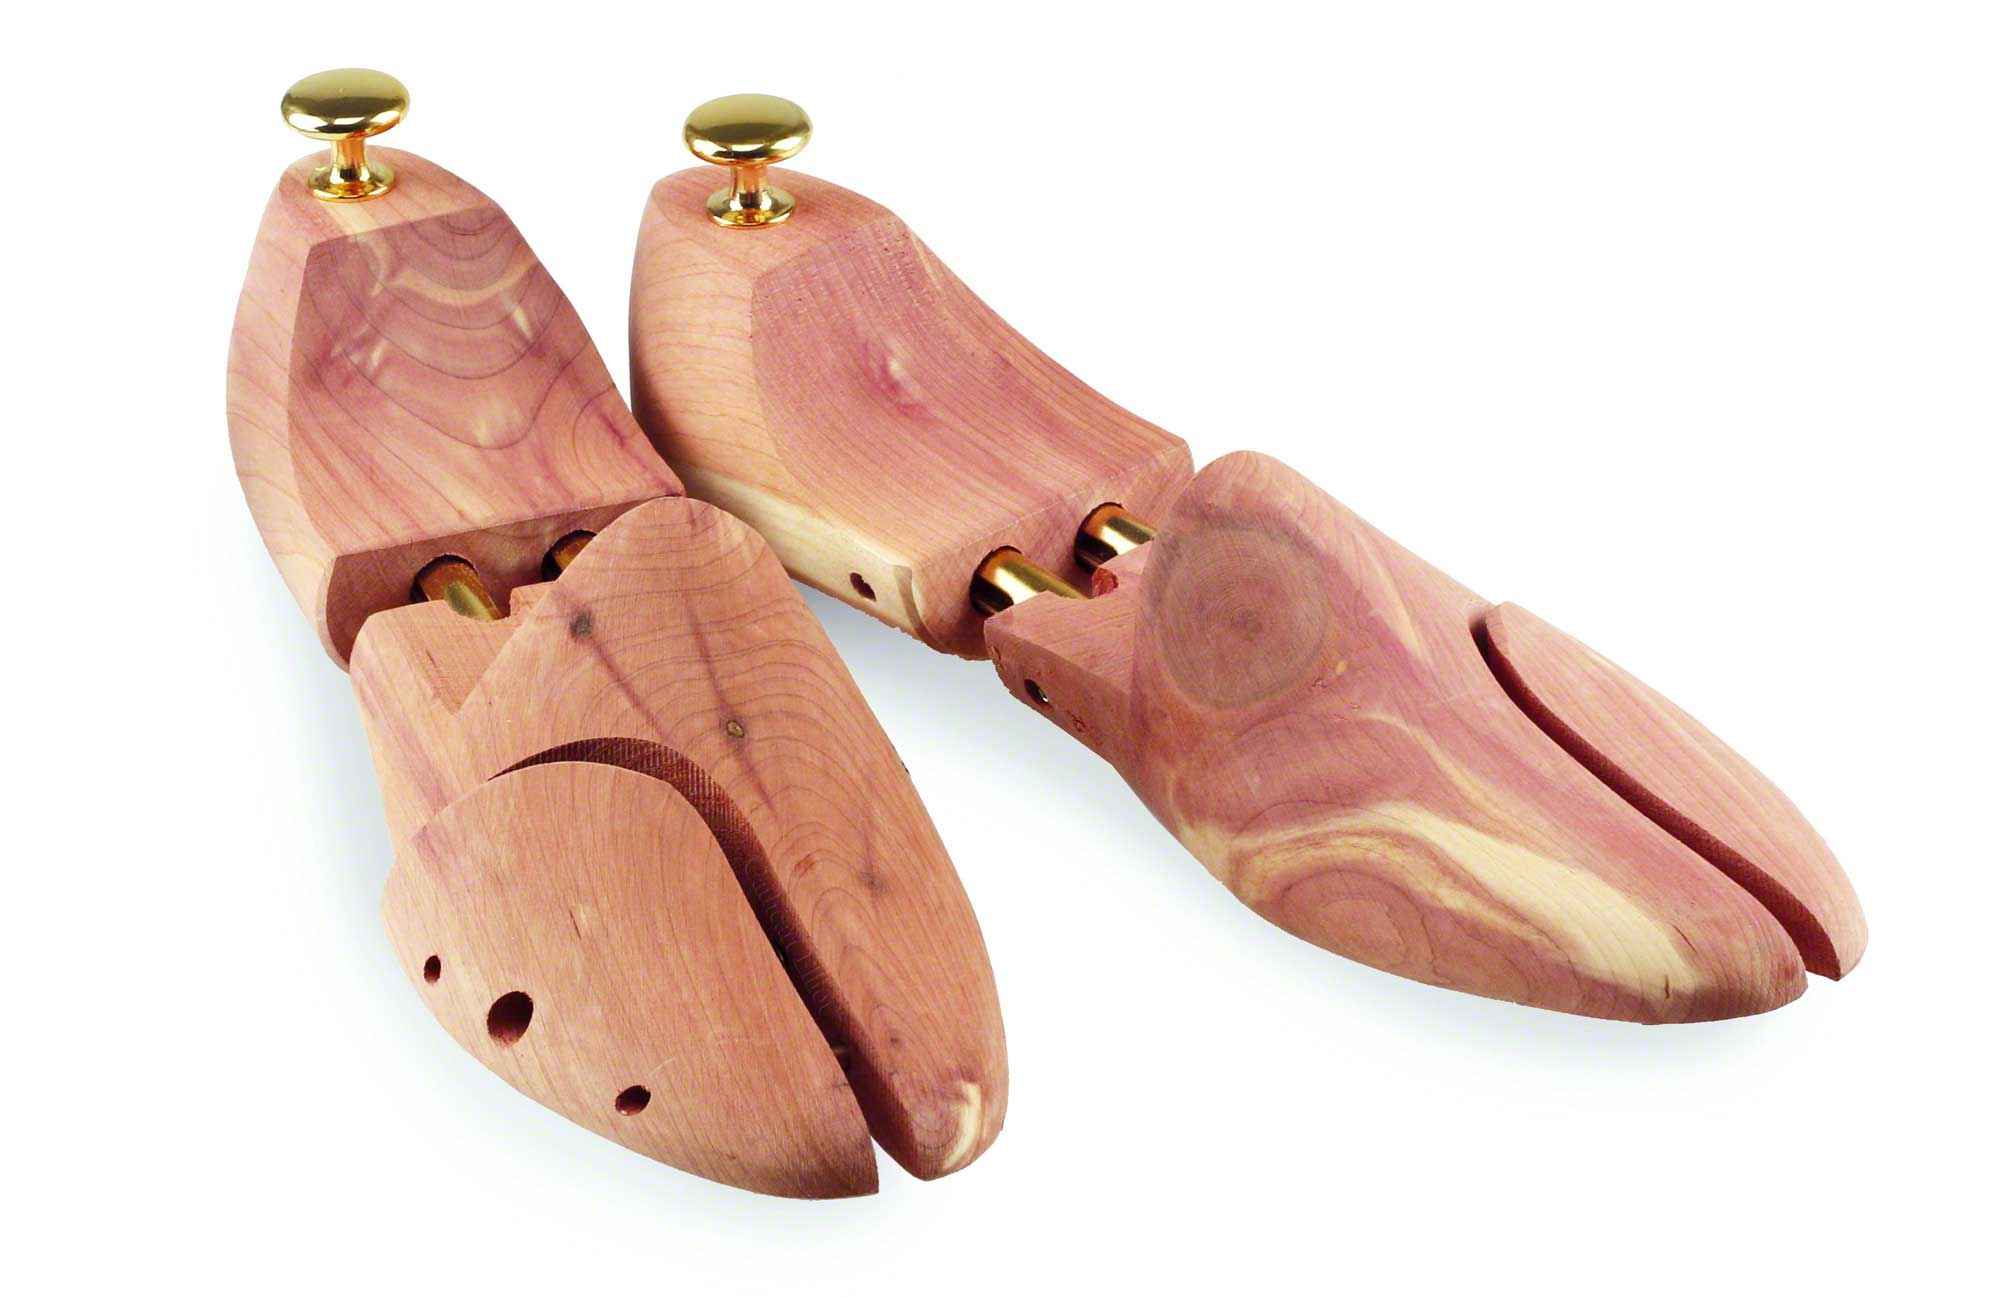 CEDAR SPACE Cedar Shoe Trees for Men Adjustable Wooden Stretcher 2-Pack 